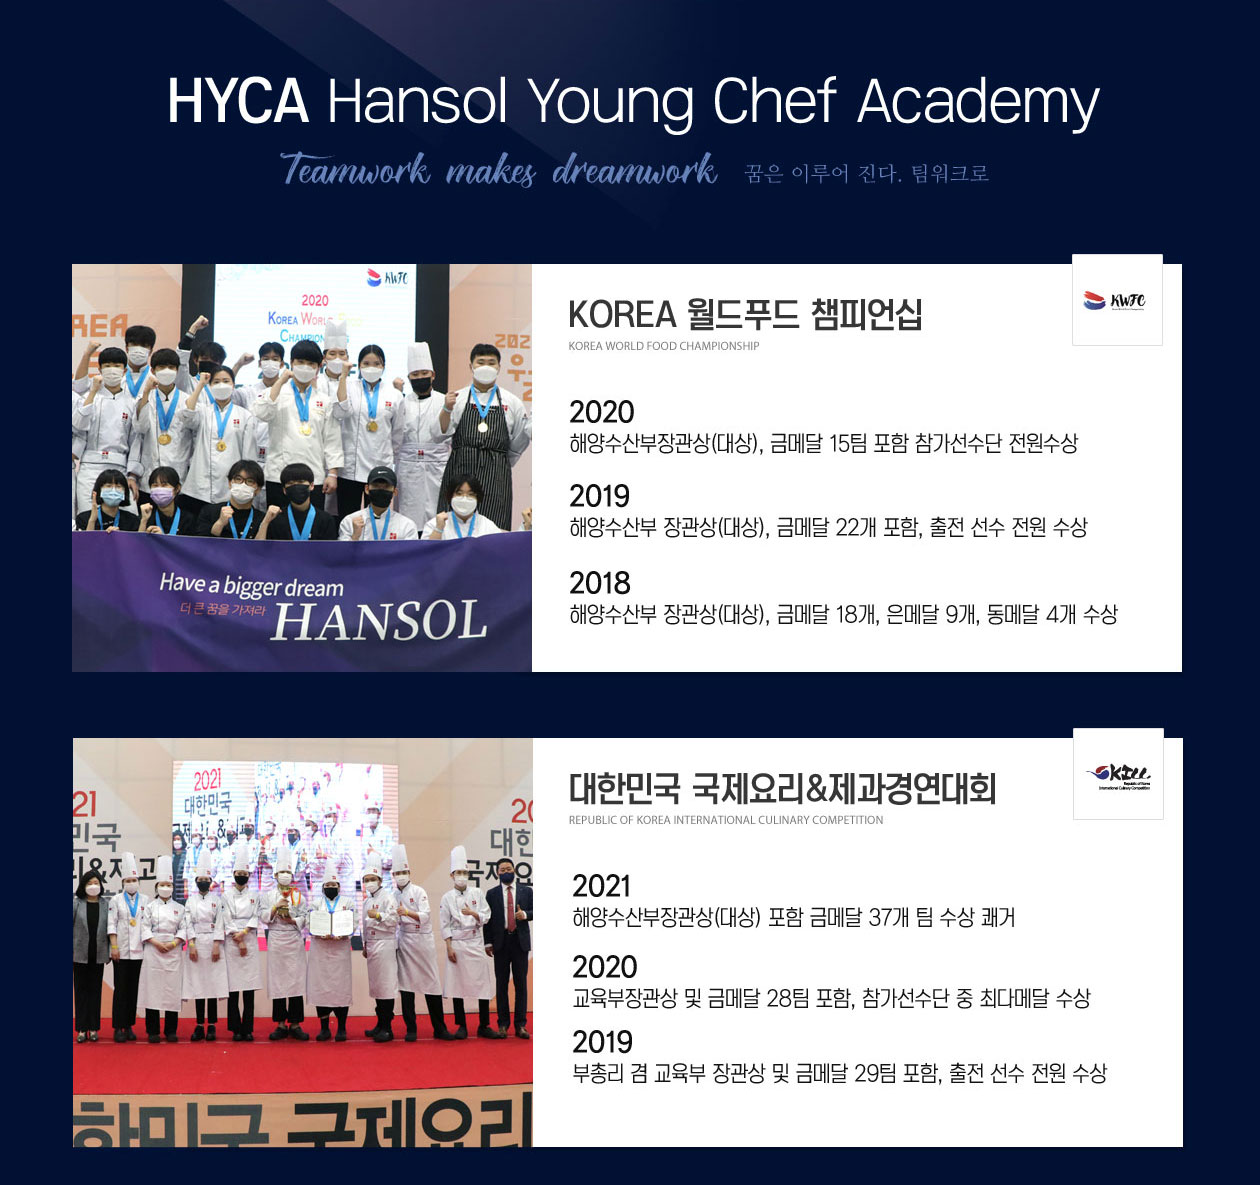 HYCA Hansol Young Chef Academy. Teamwork makes dreamwork.꿈은 이루어진다. 팀워크로.KOREA 월드푸드 챔피언십,대한민국 국제요리&제과경연대회